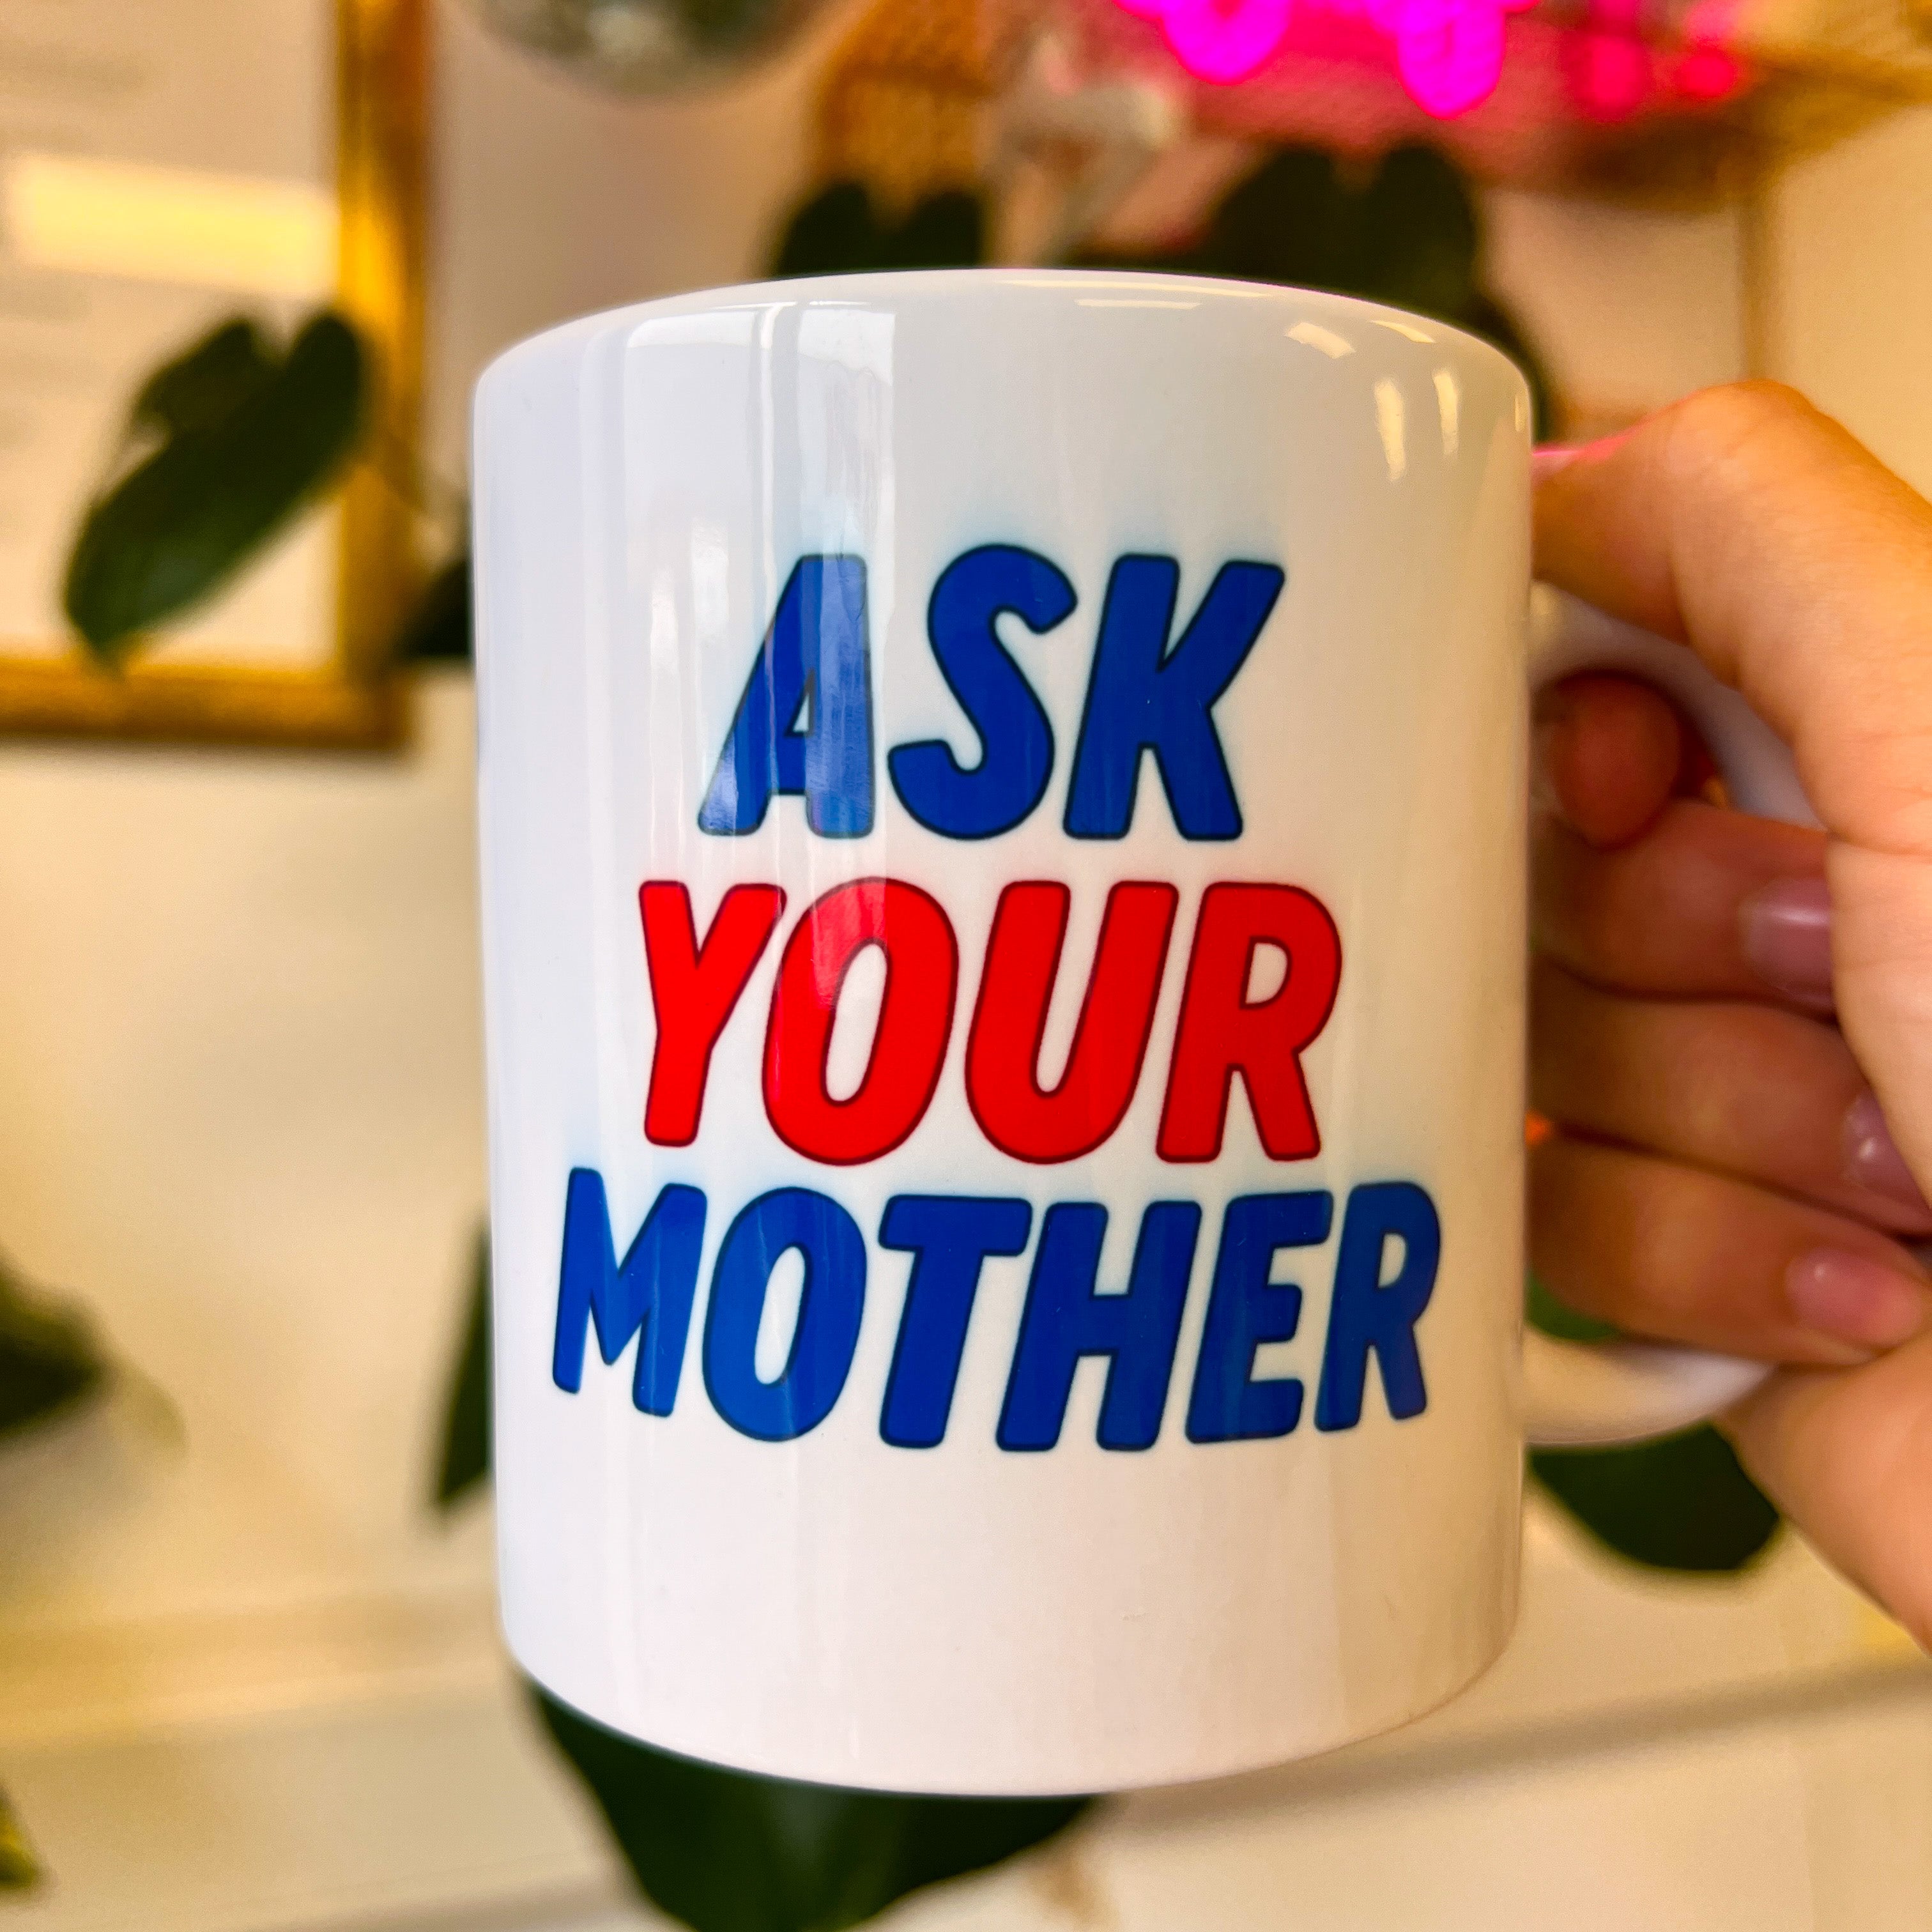 Ask your mother faulty mug